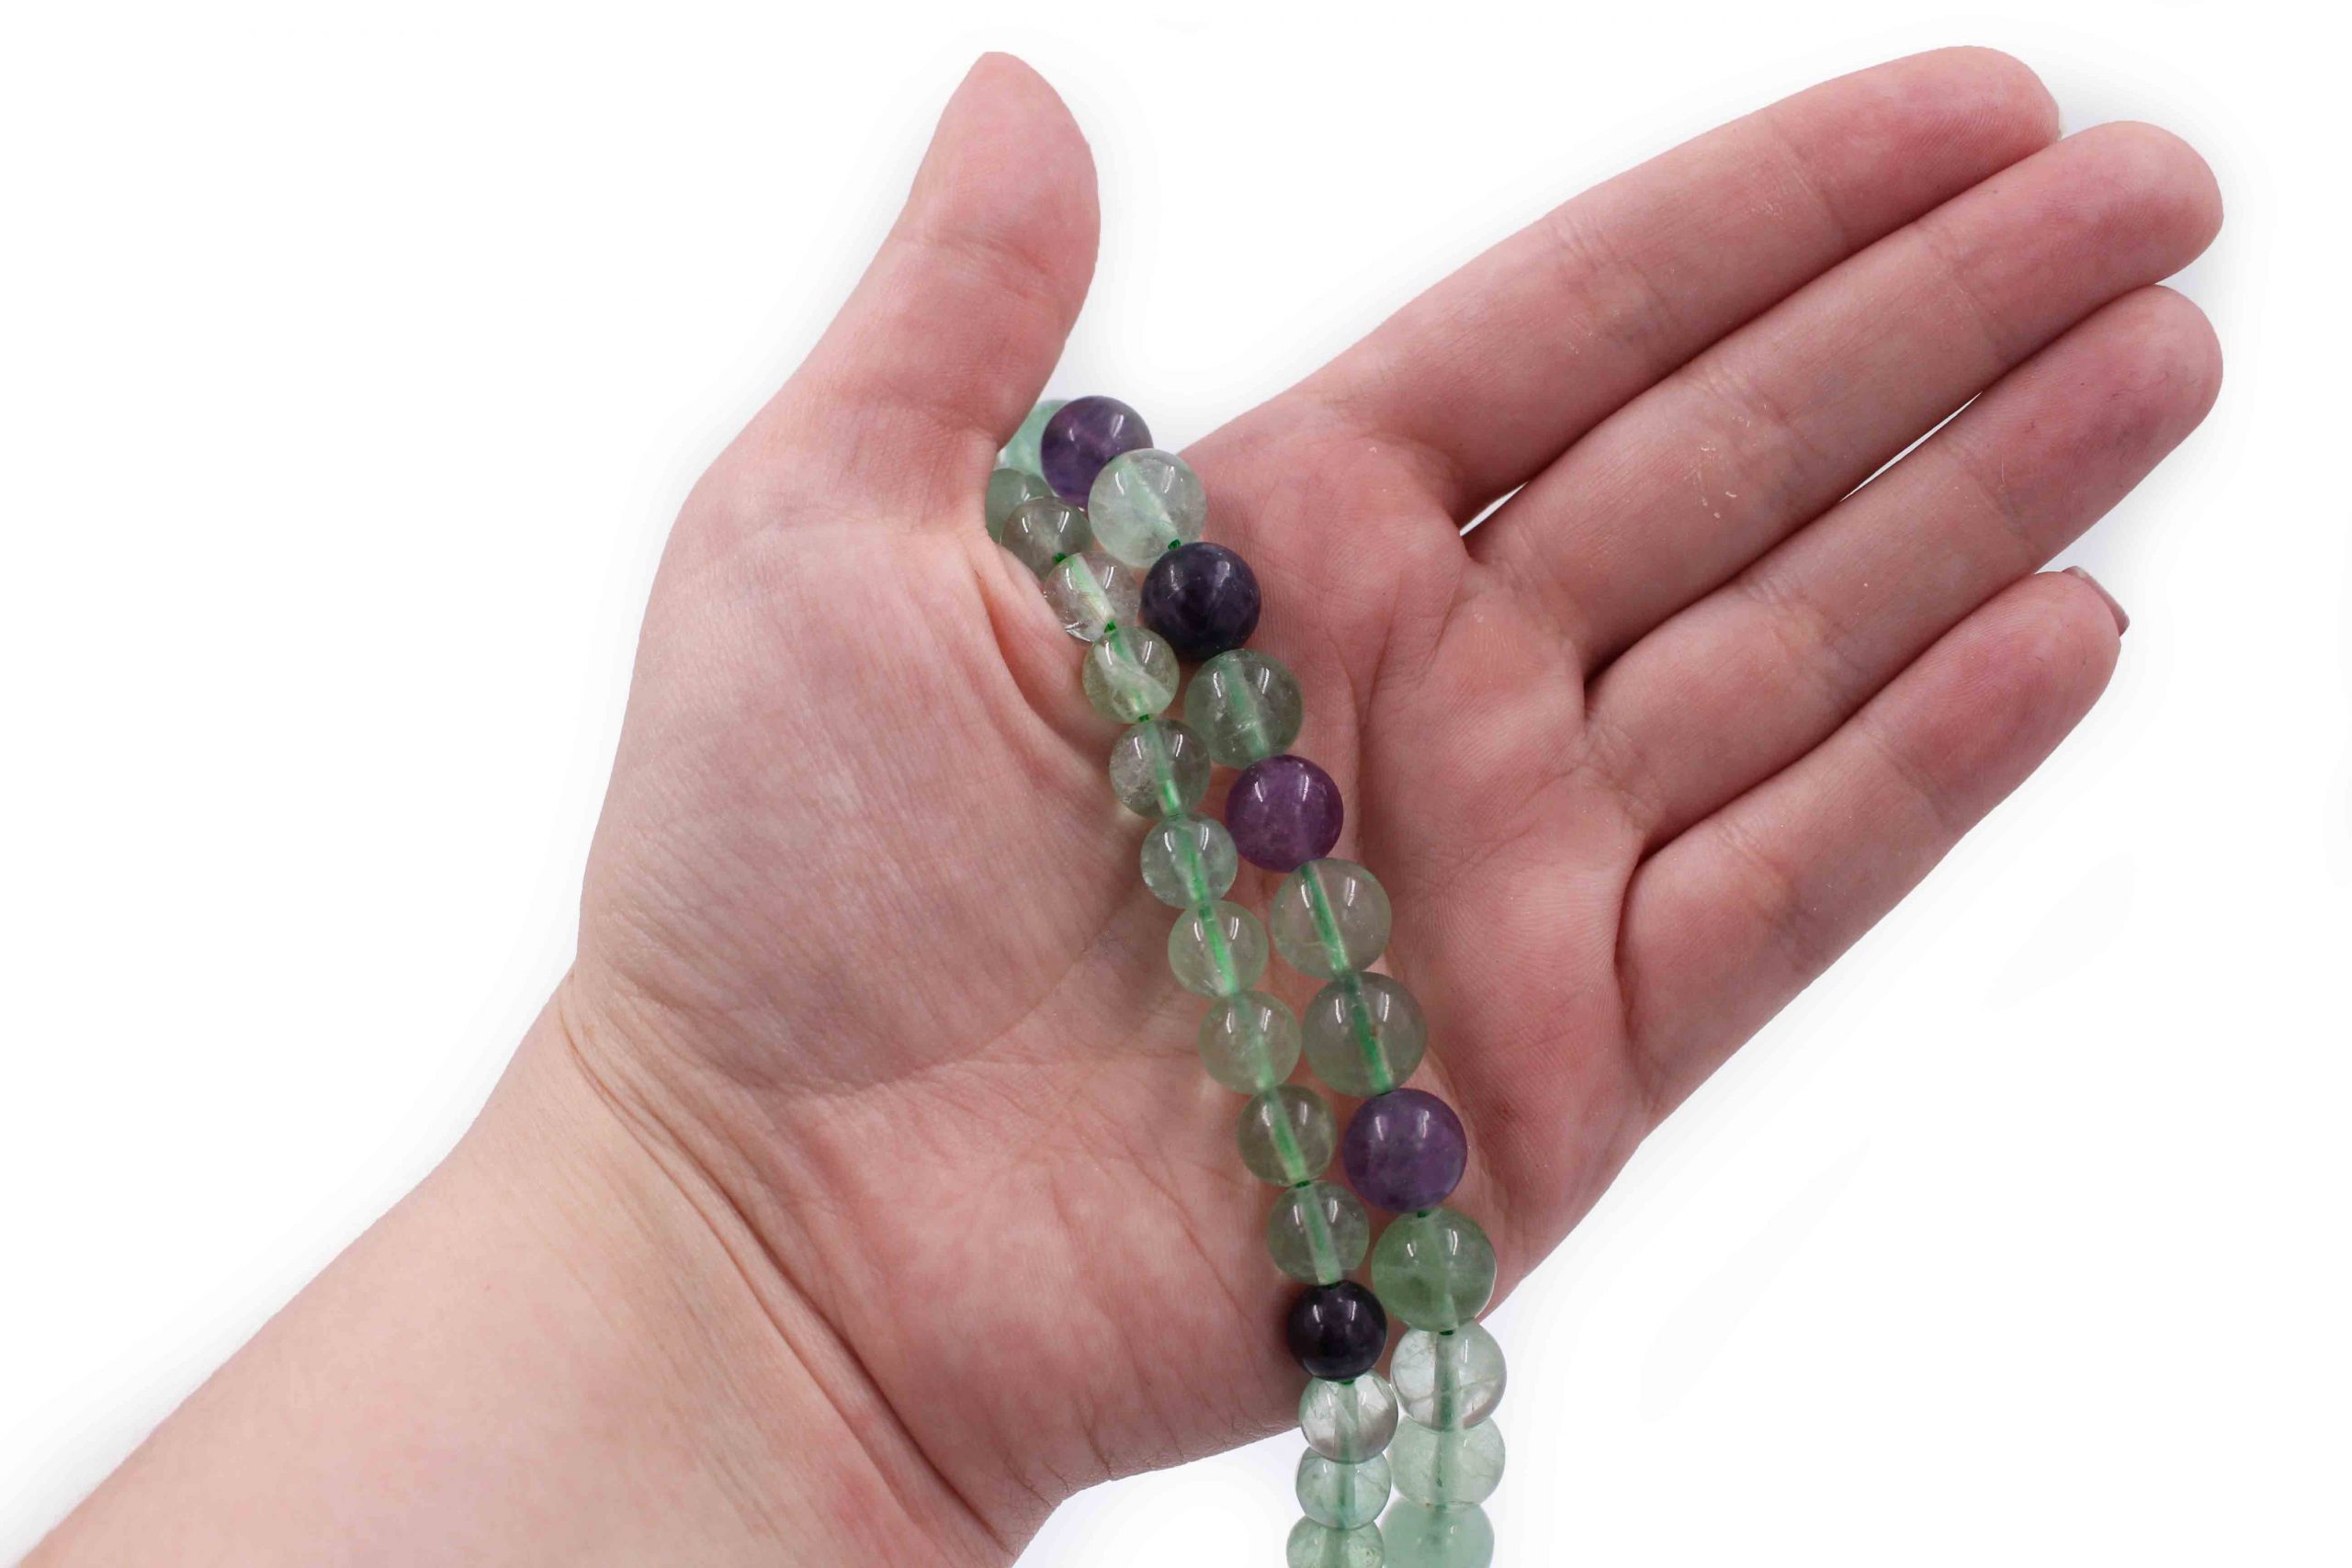 Fluorite Rainbow Beads - Crystal Dreams